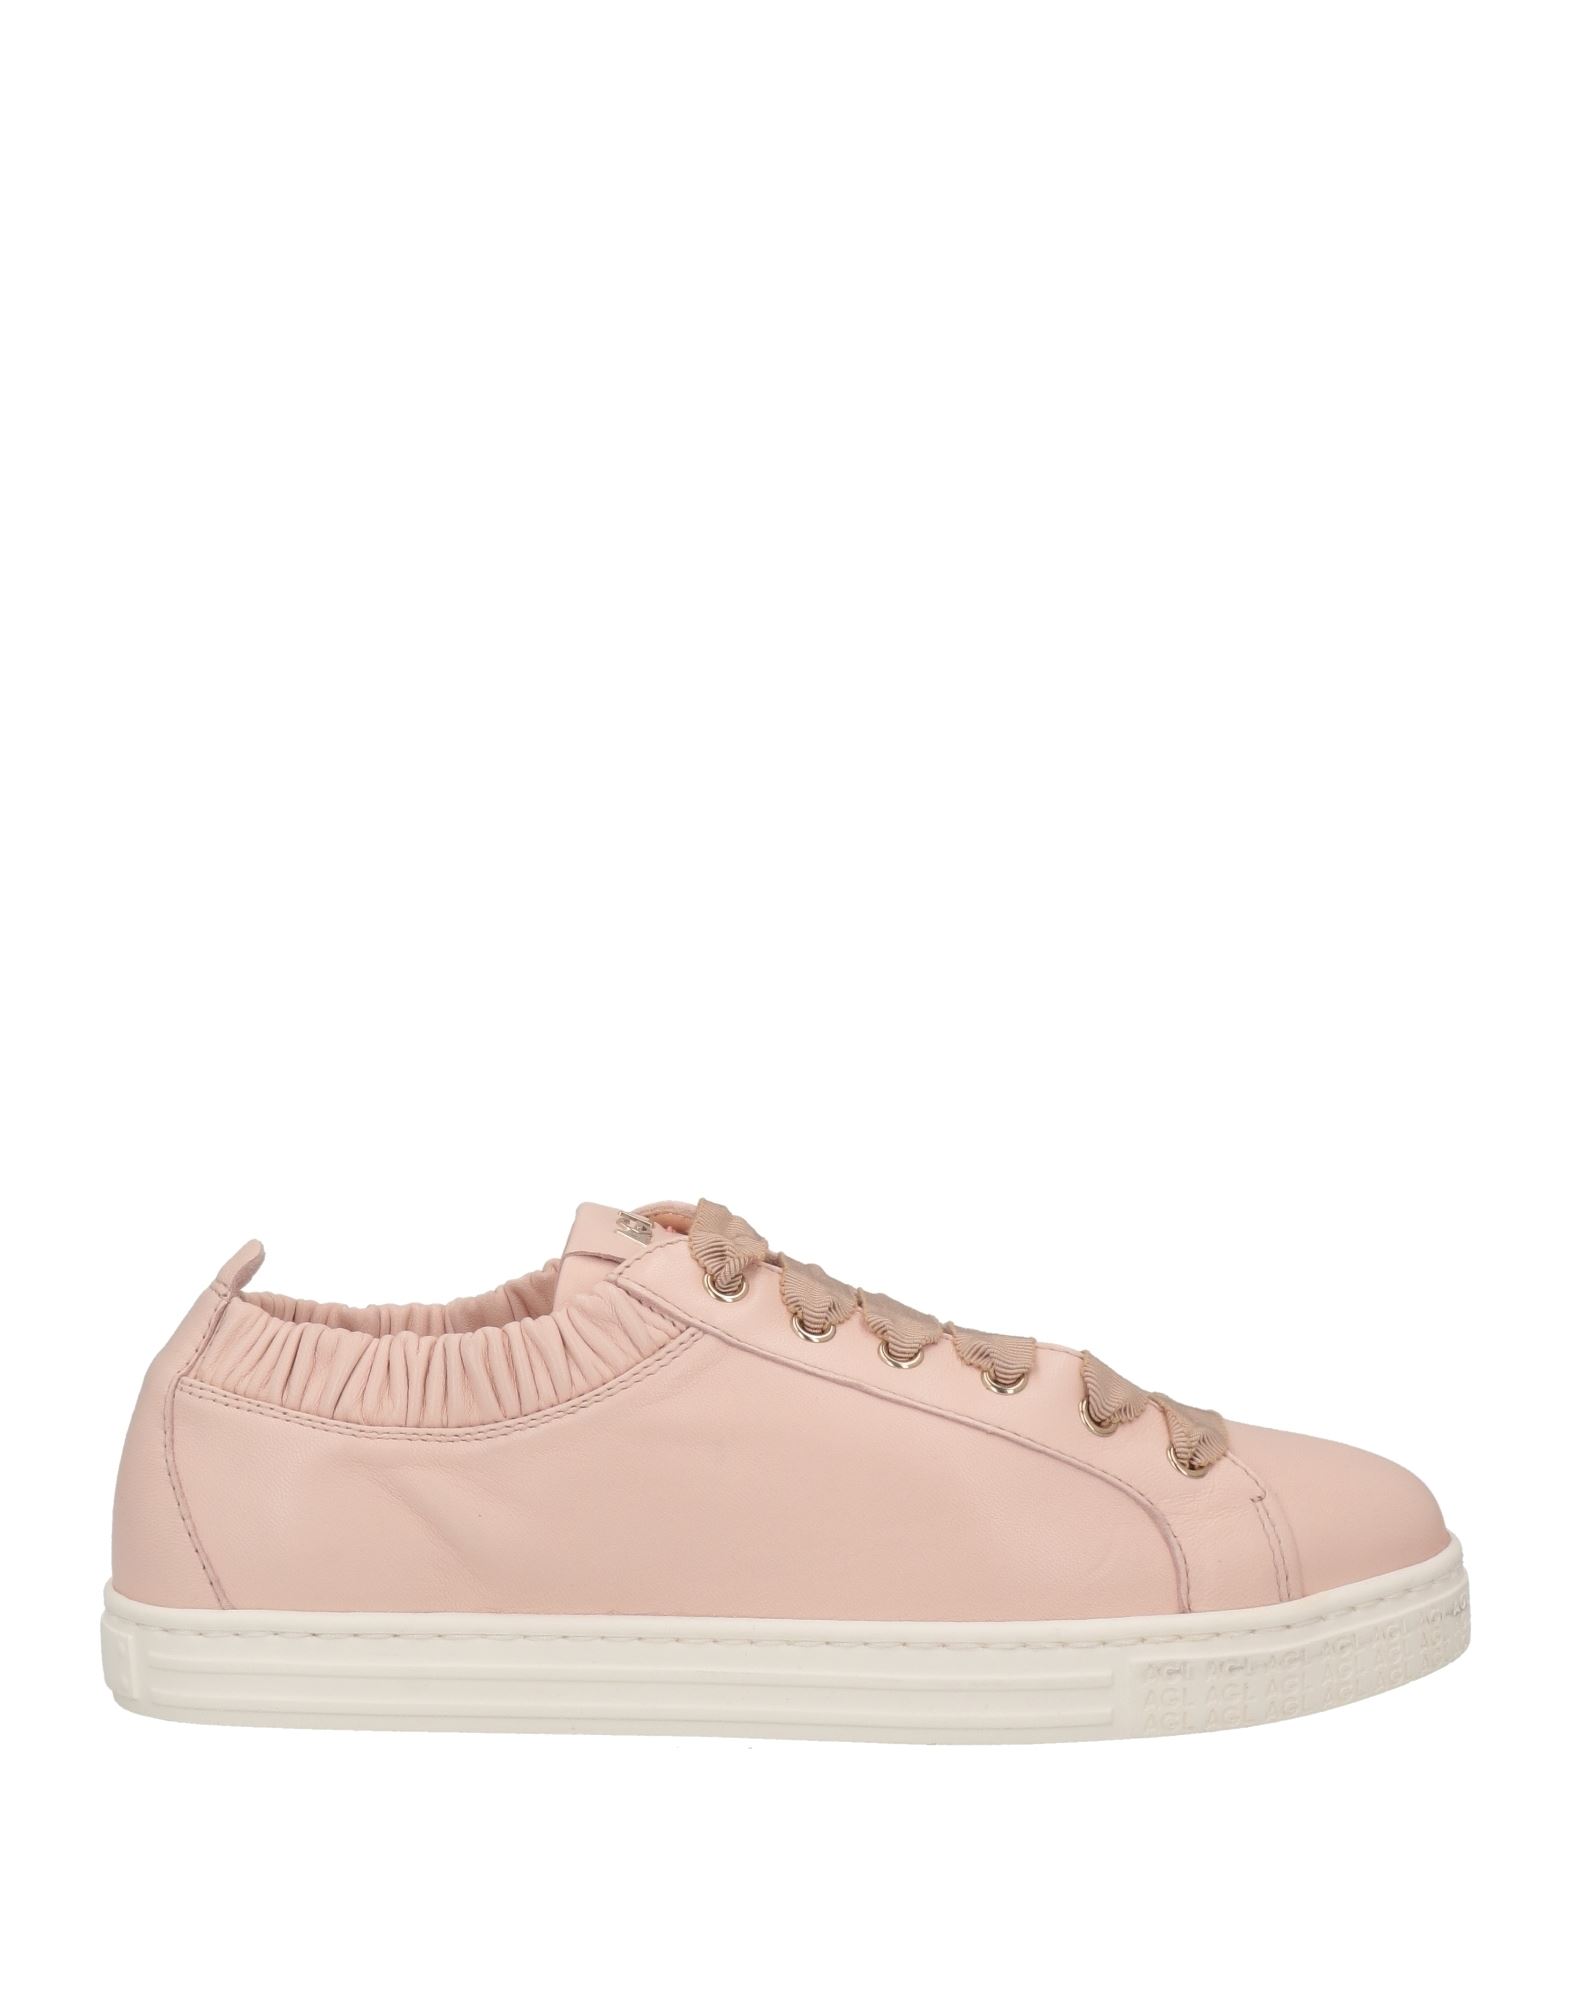 Shop Agl Attilio Giusti Leombruni Agl Woman Sneakers Light Pink Size 8 Soft Leather